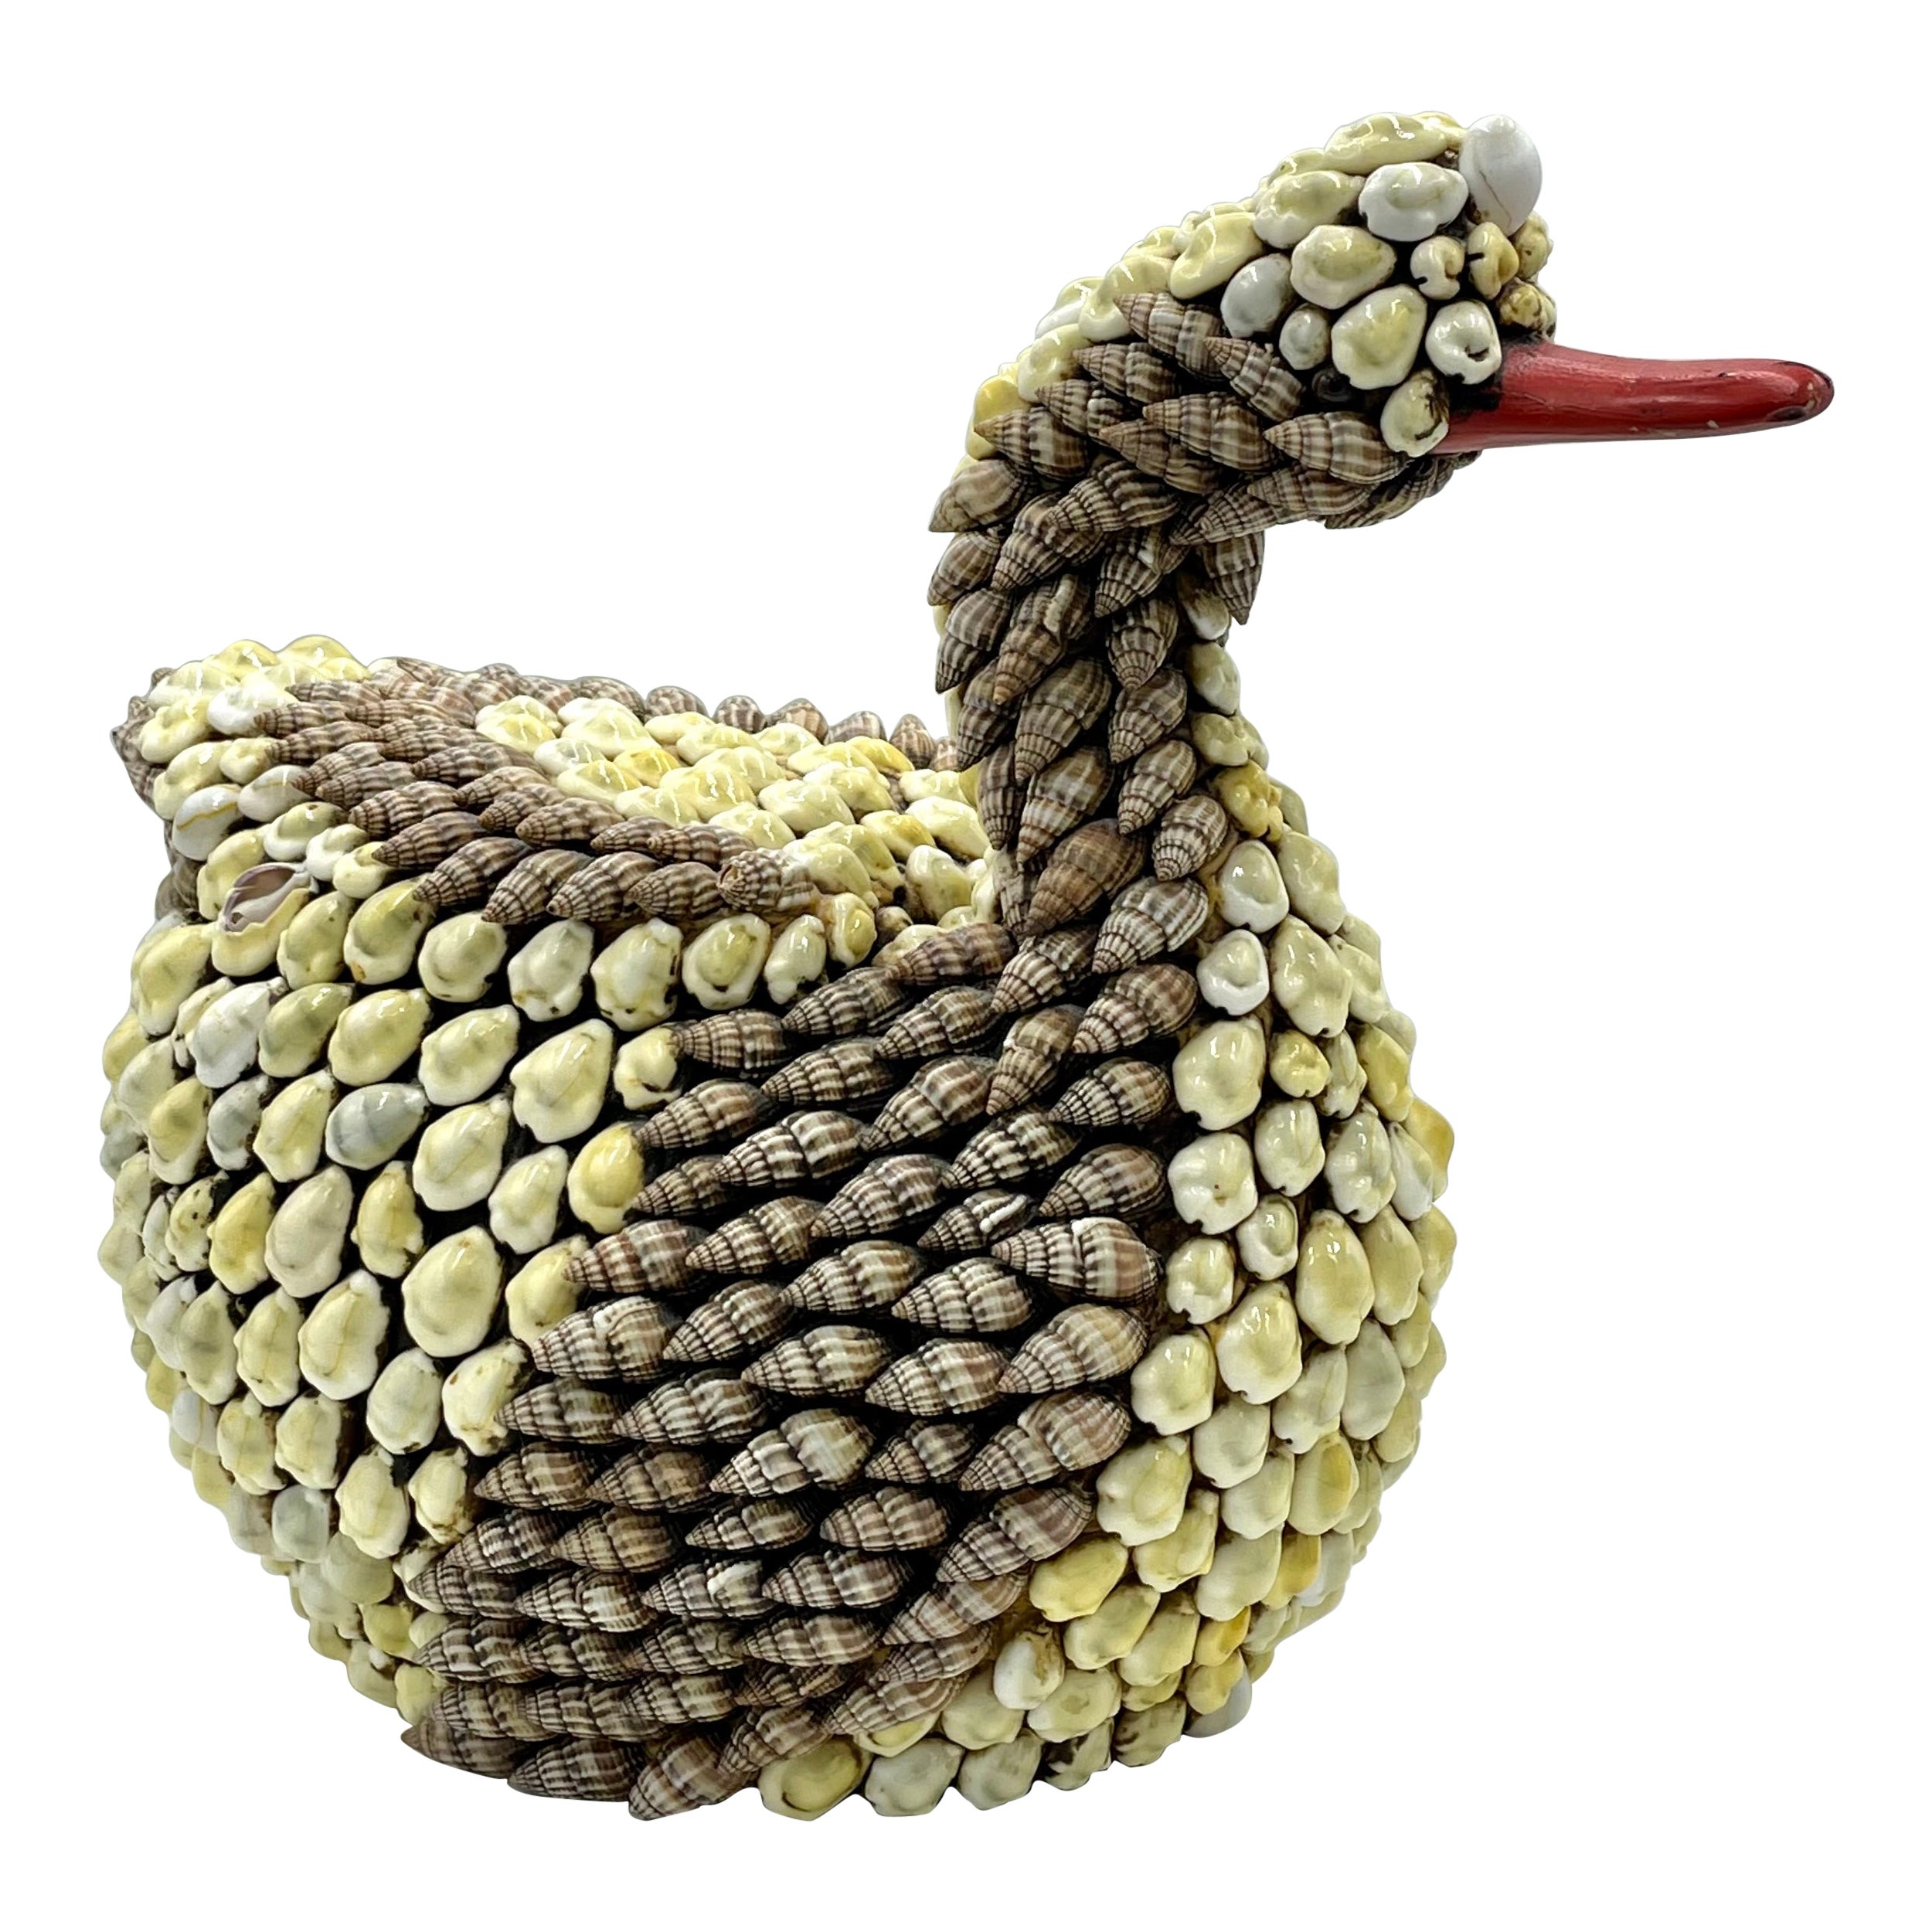 Anthony Redmile Muschel verkrustete Ente oder Swan Box Redmile Objects London England im Angebot